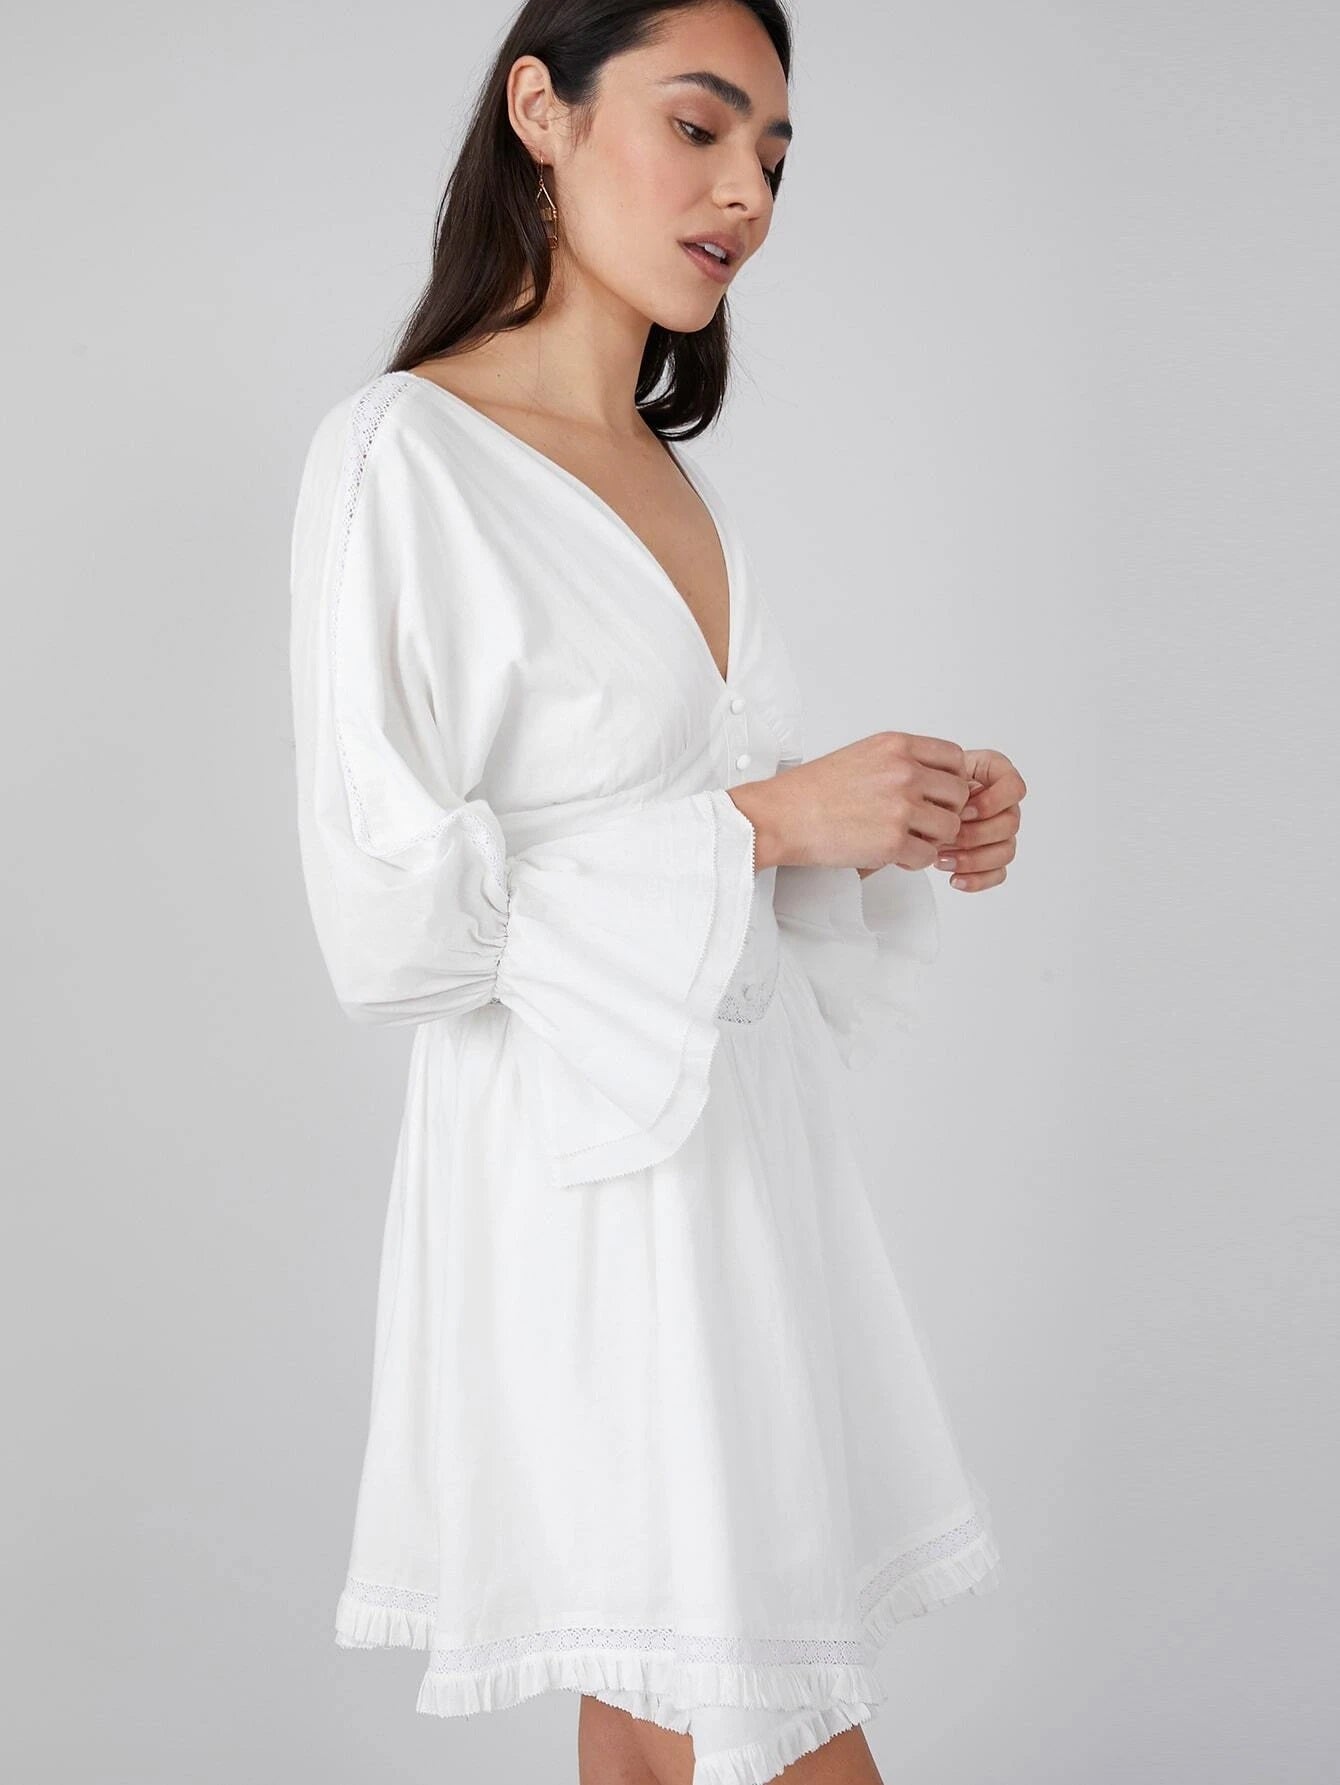 CM-ES201839 Women Elegant European Style V-Neck Empire Waist A-Line Dress - White